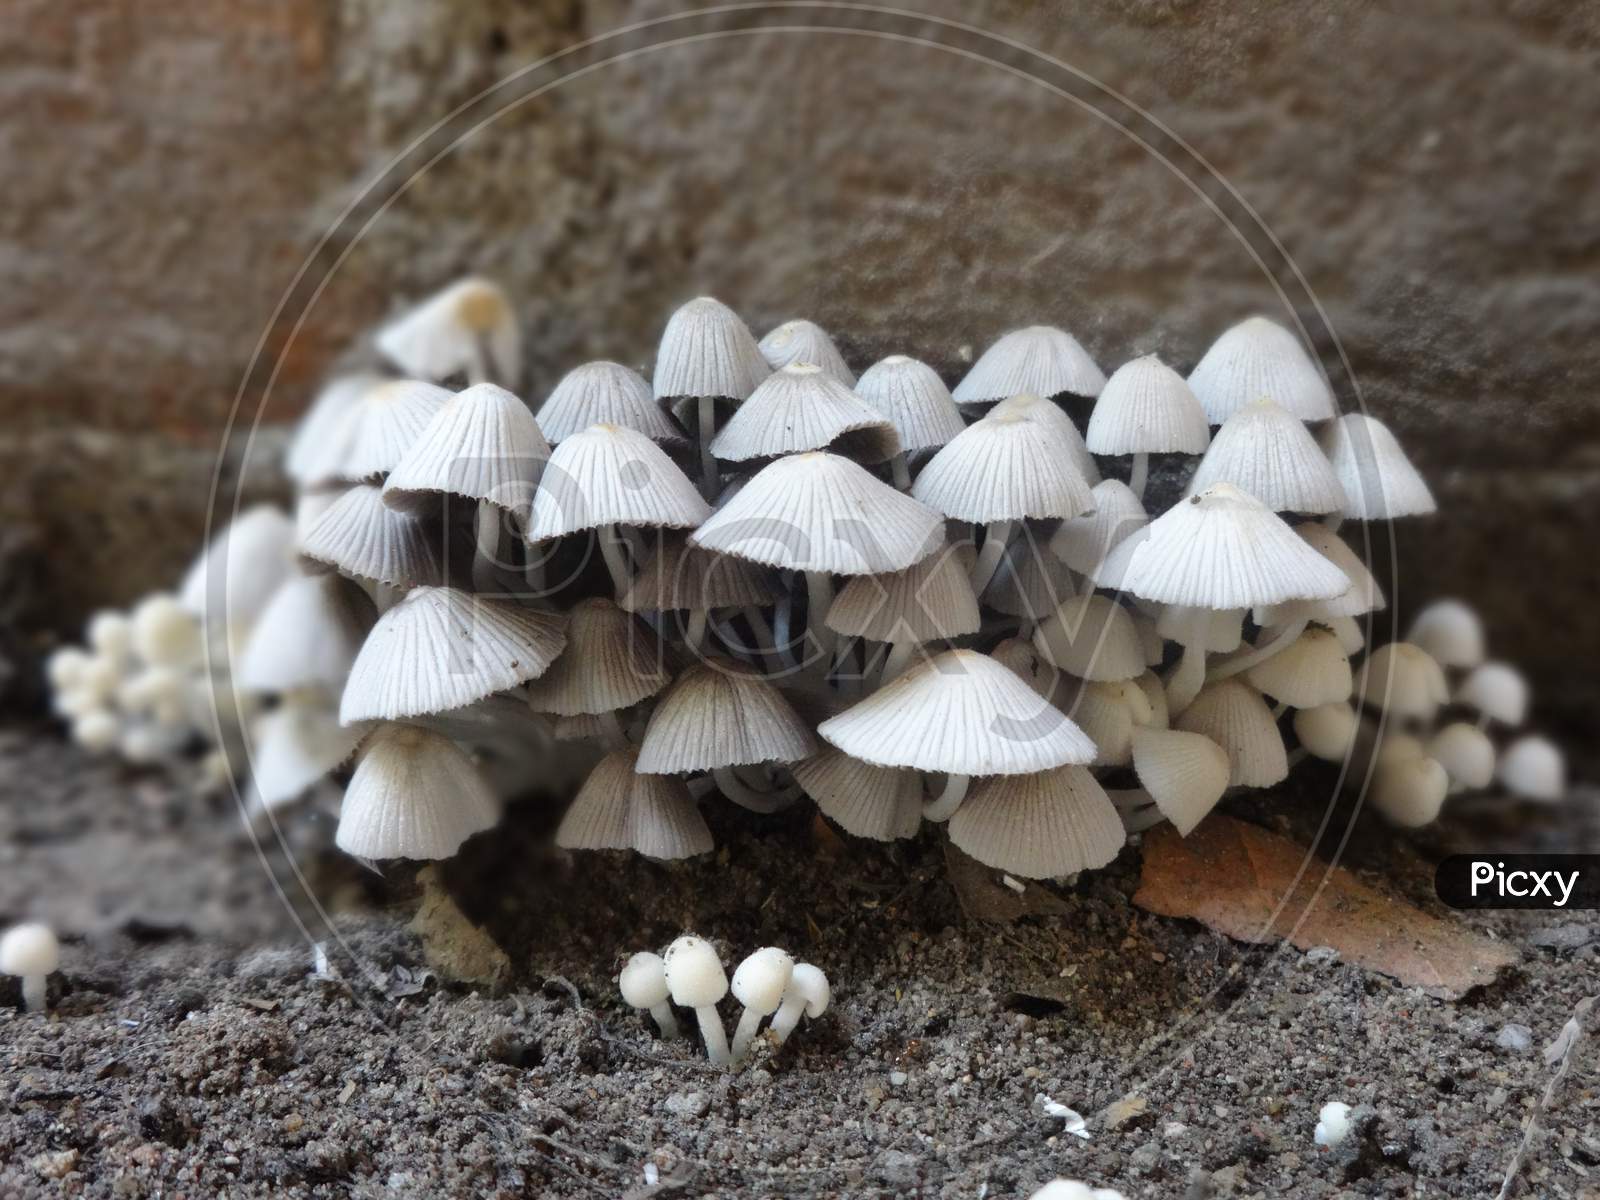 Champignon mushroom closeup picture indian mushroom, oyster mushroom